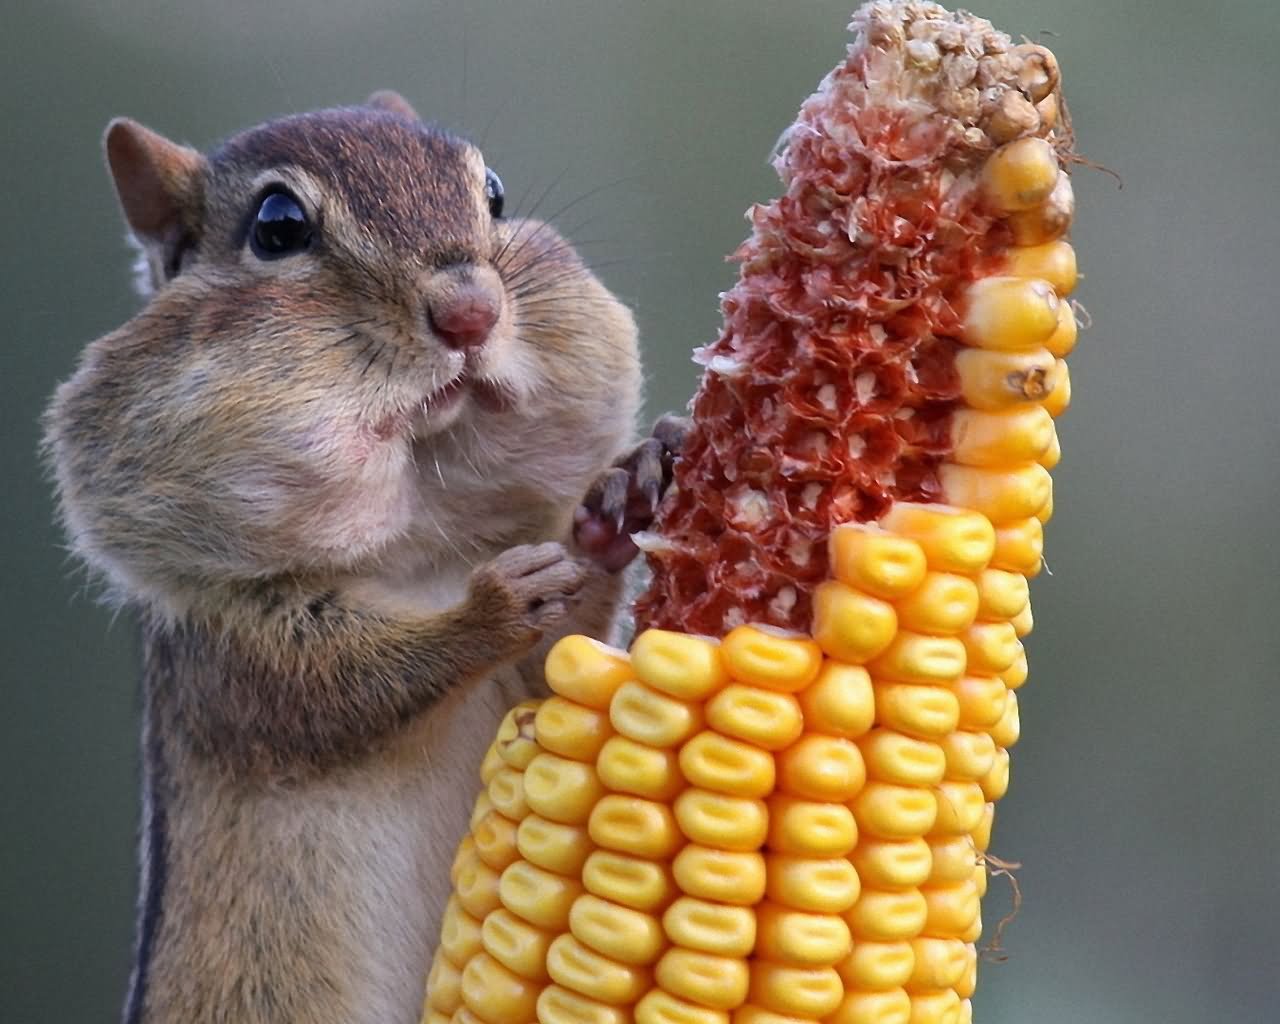 Funny Squirrel Eating Corn NOM NOM NOM Image